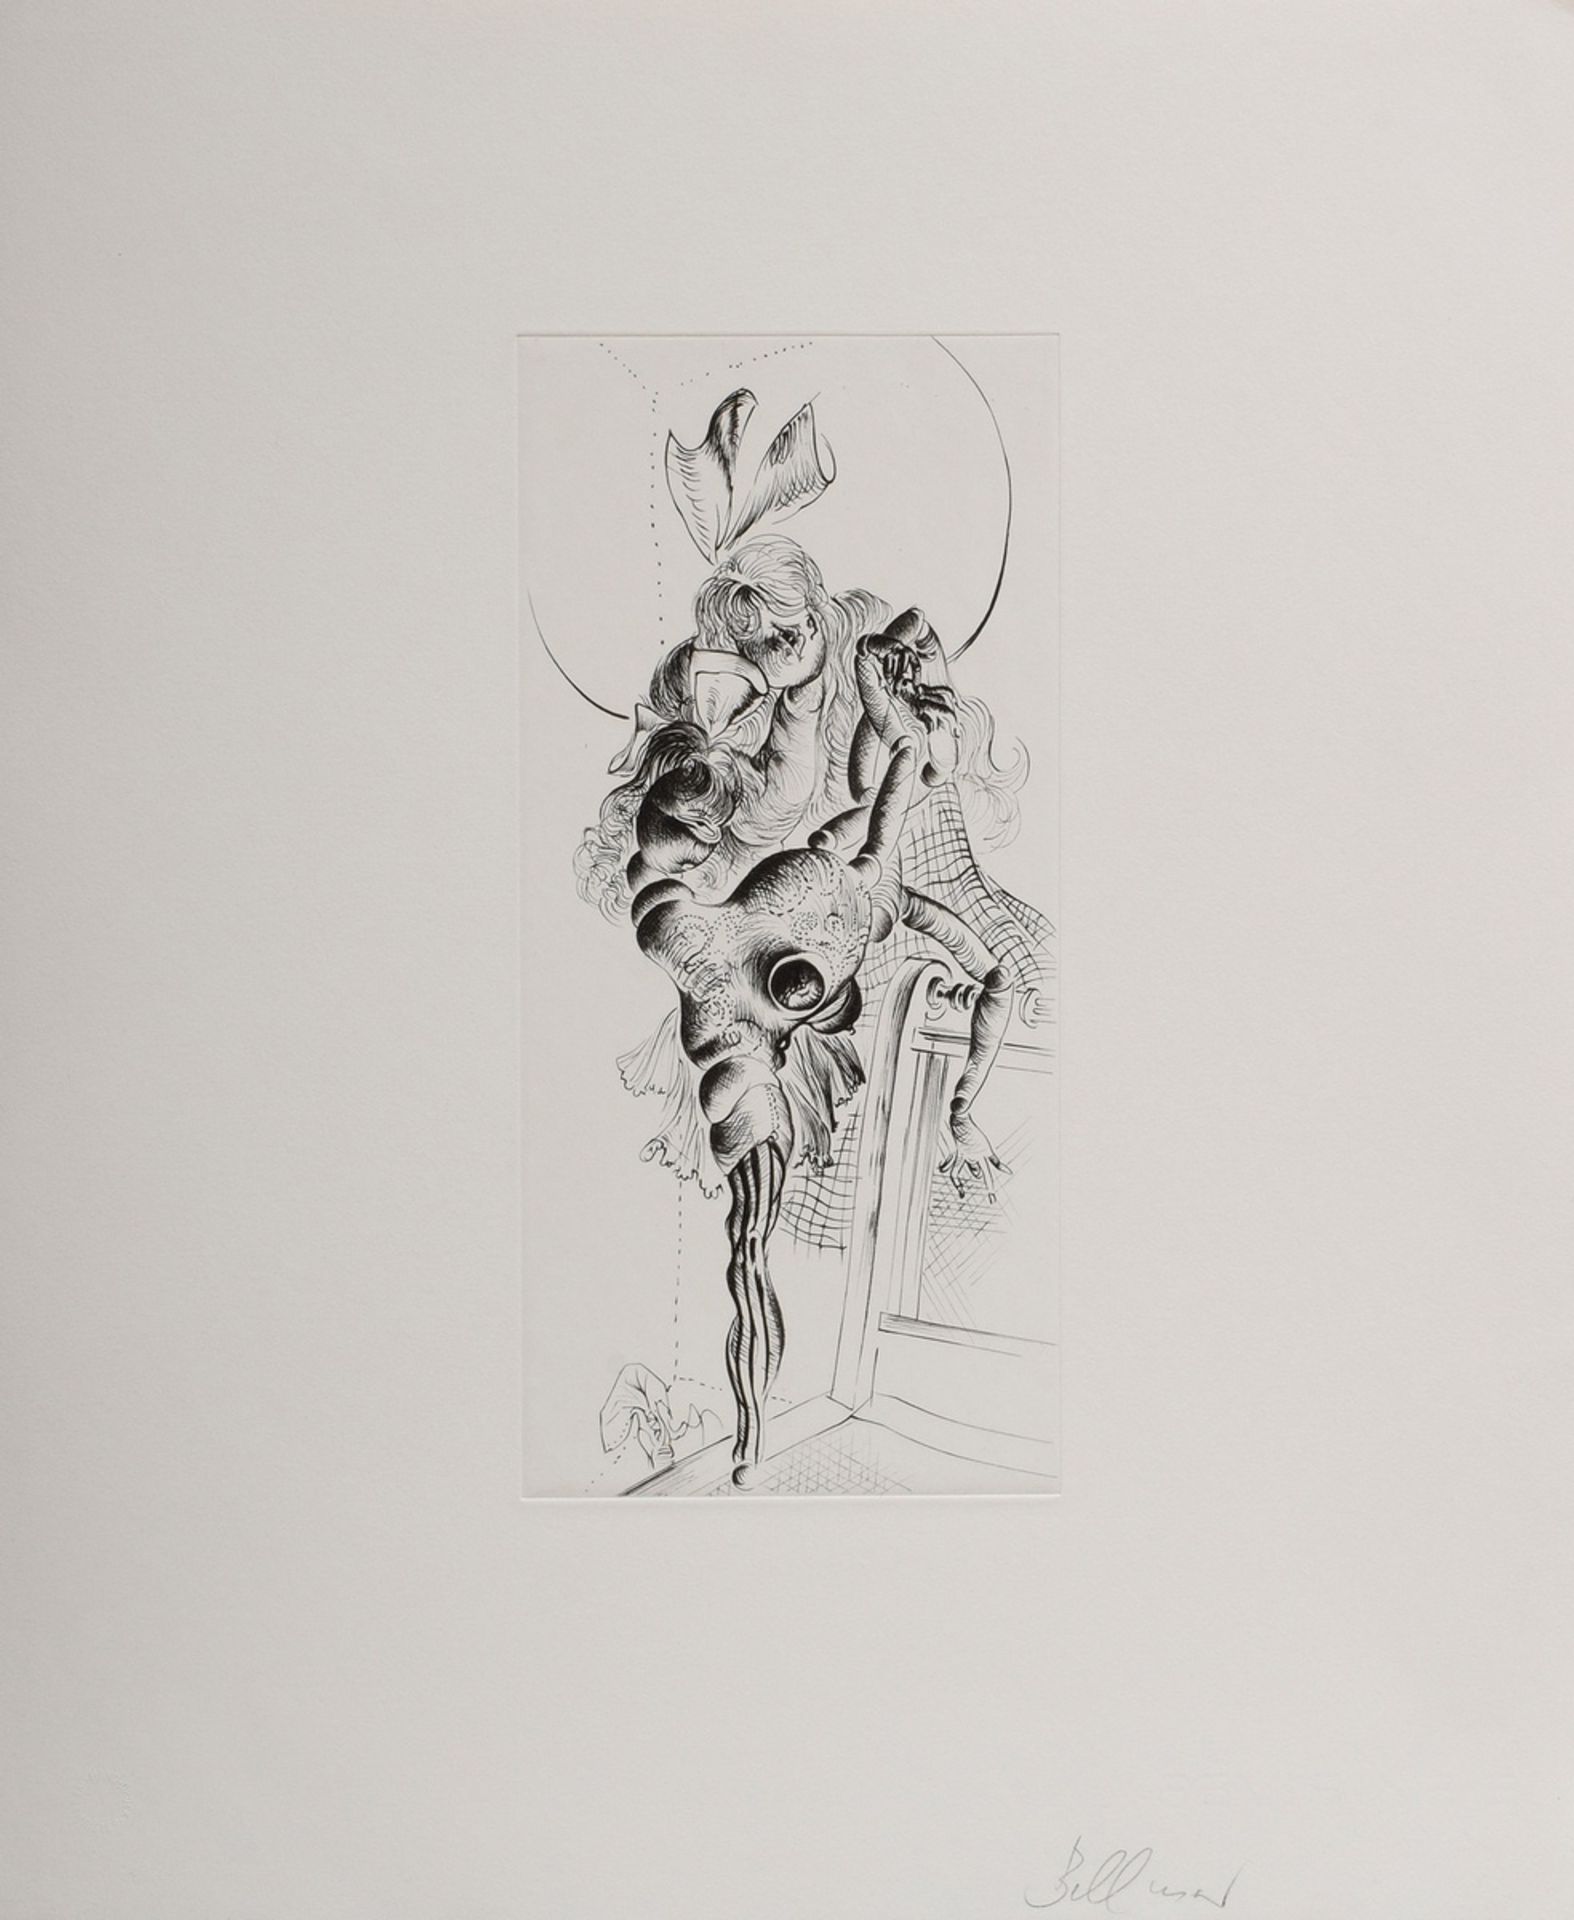 7 Bellmer, Hans (1902-1975) "Female", etchings, u. inscr., printer's proofs, PM 12x8,2-30,3x21,4cm, - Image 15 of 17